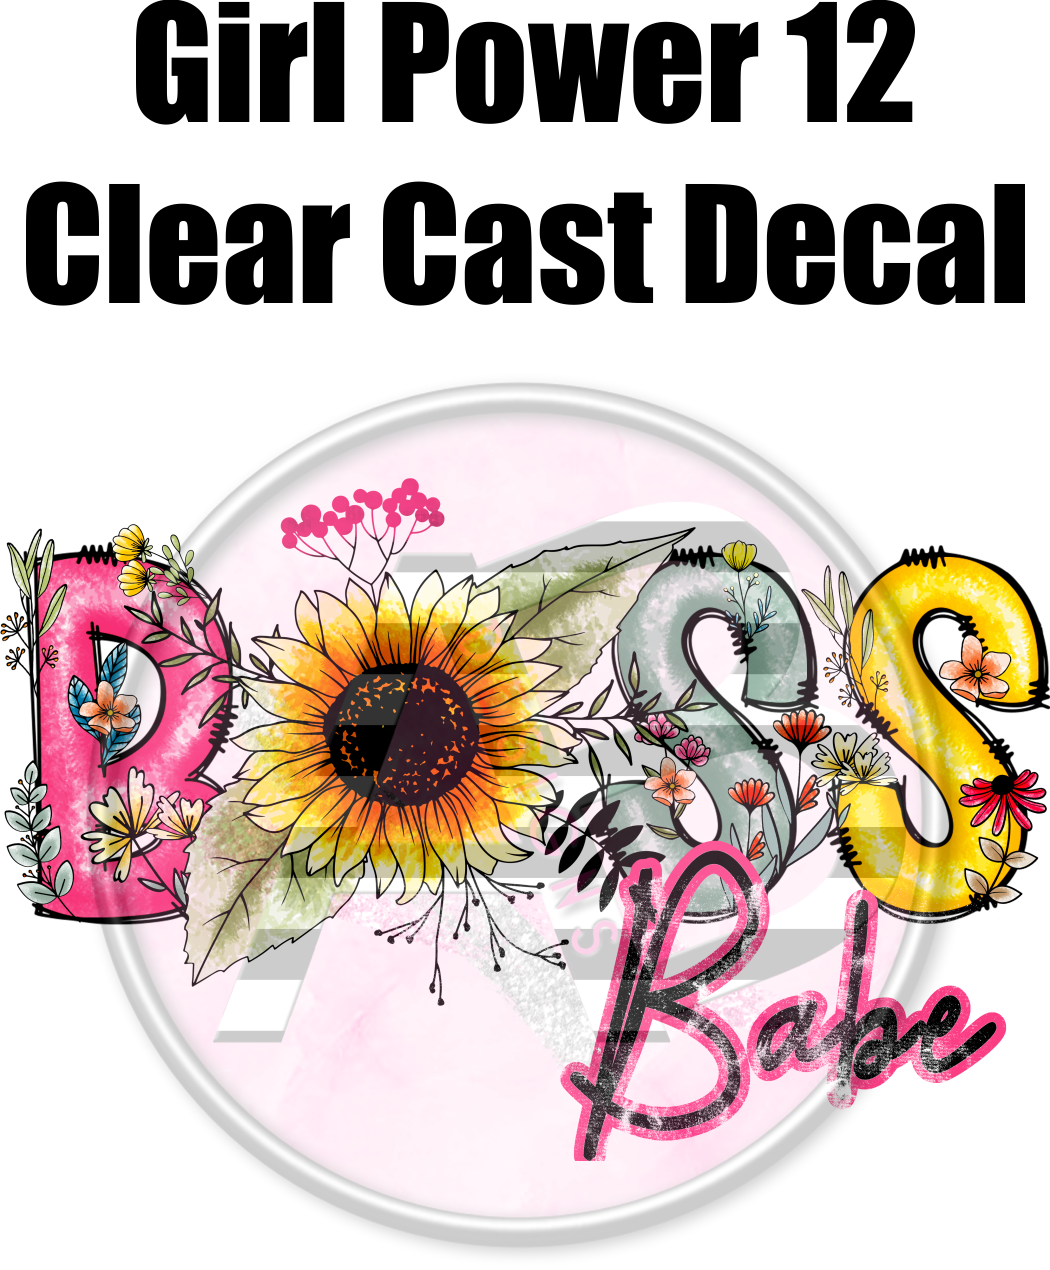 Girl Power 12 - Clear Cast Decal - 127